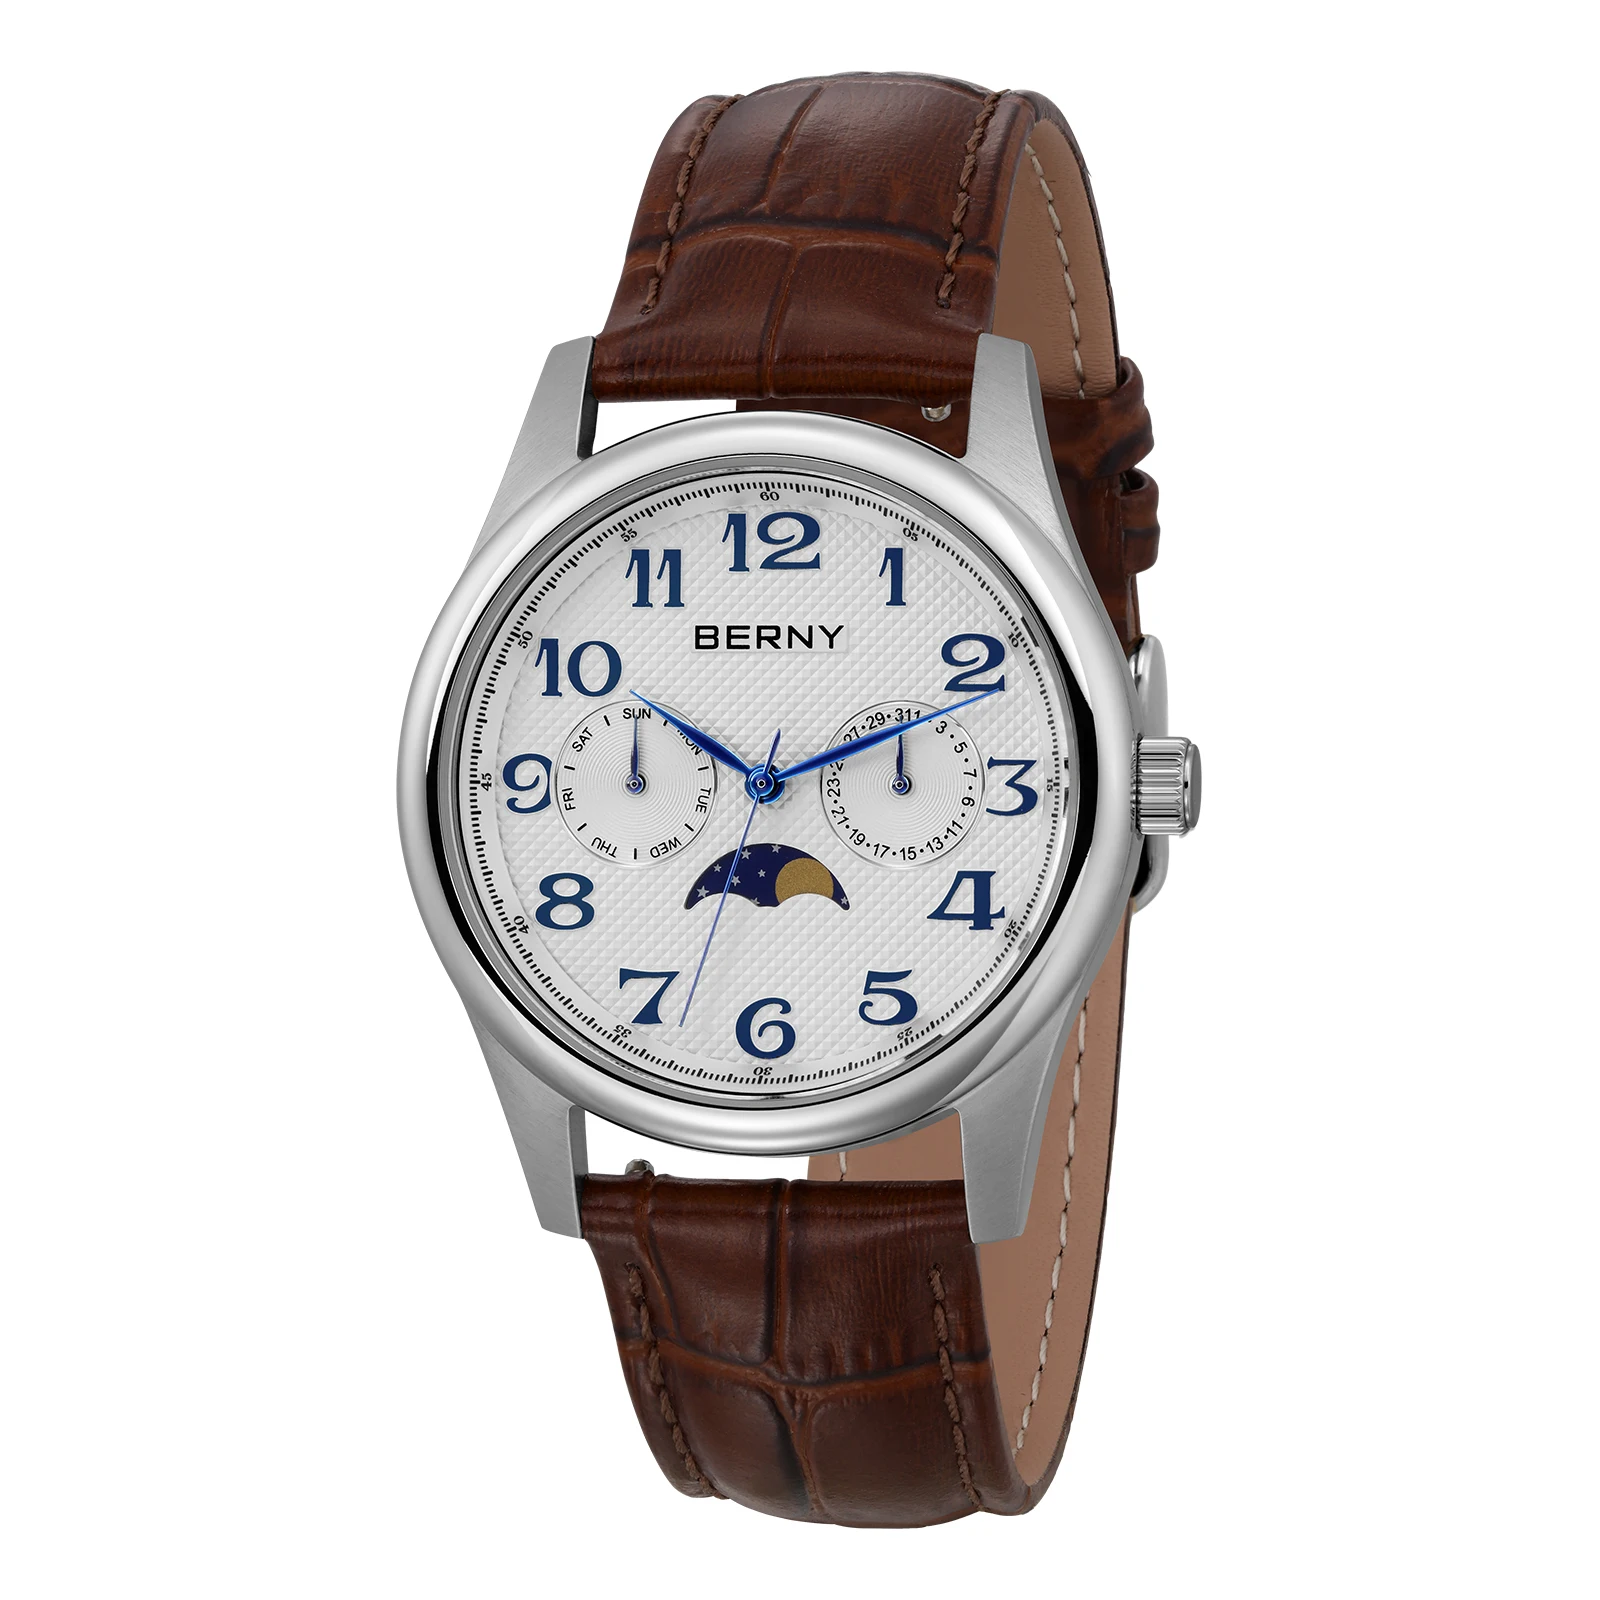 

BERNY Luxury Watches for Men Calendar Vintage Quartz Male Watch Easy Read Moon Phase Calendar Business Dress Men's Wristwatch